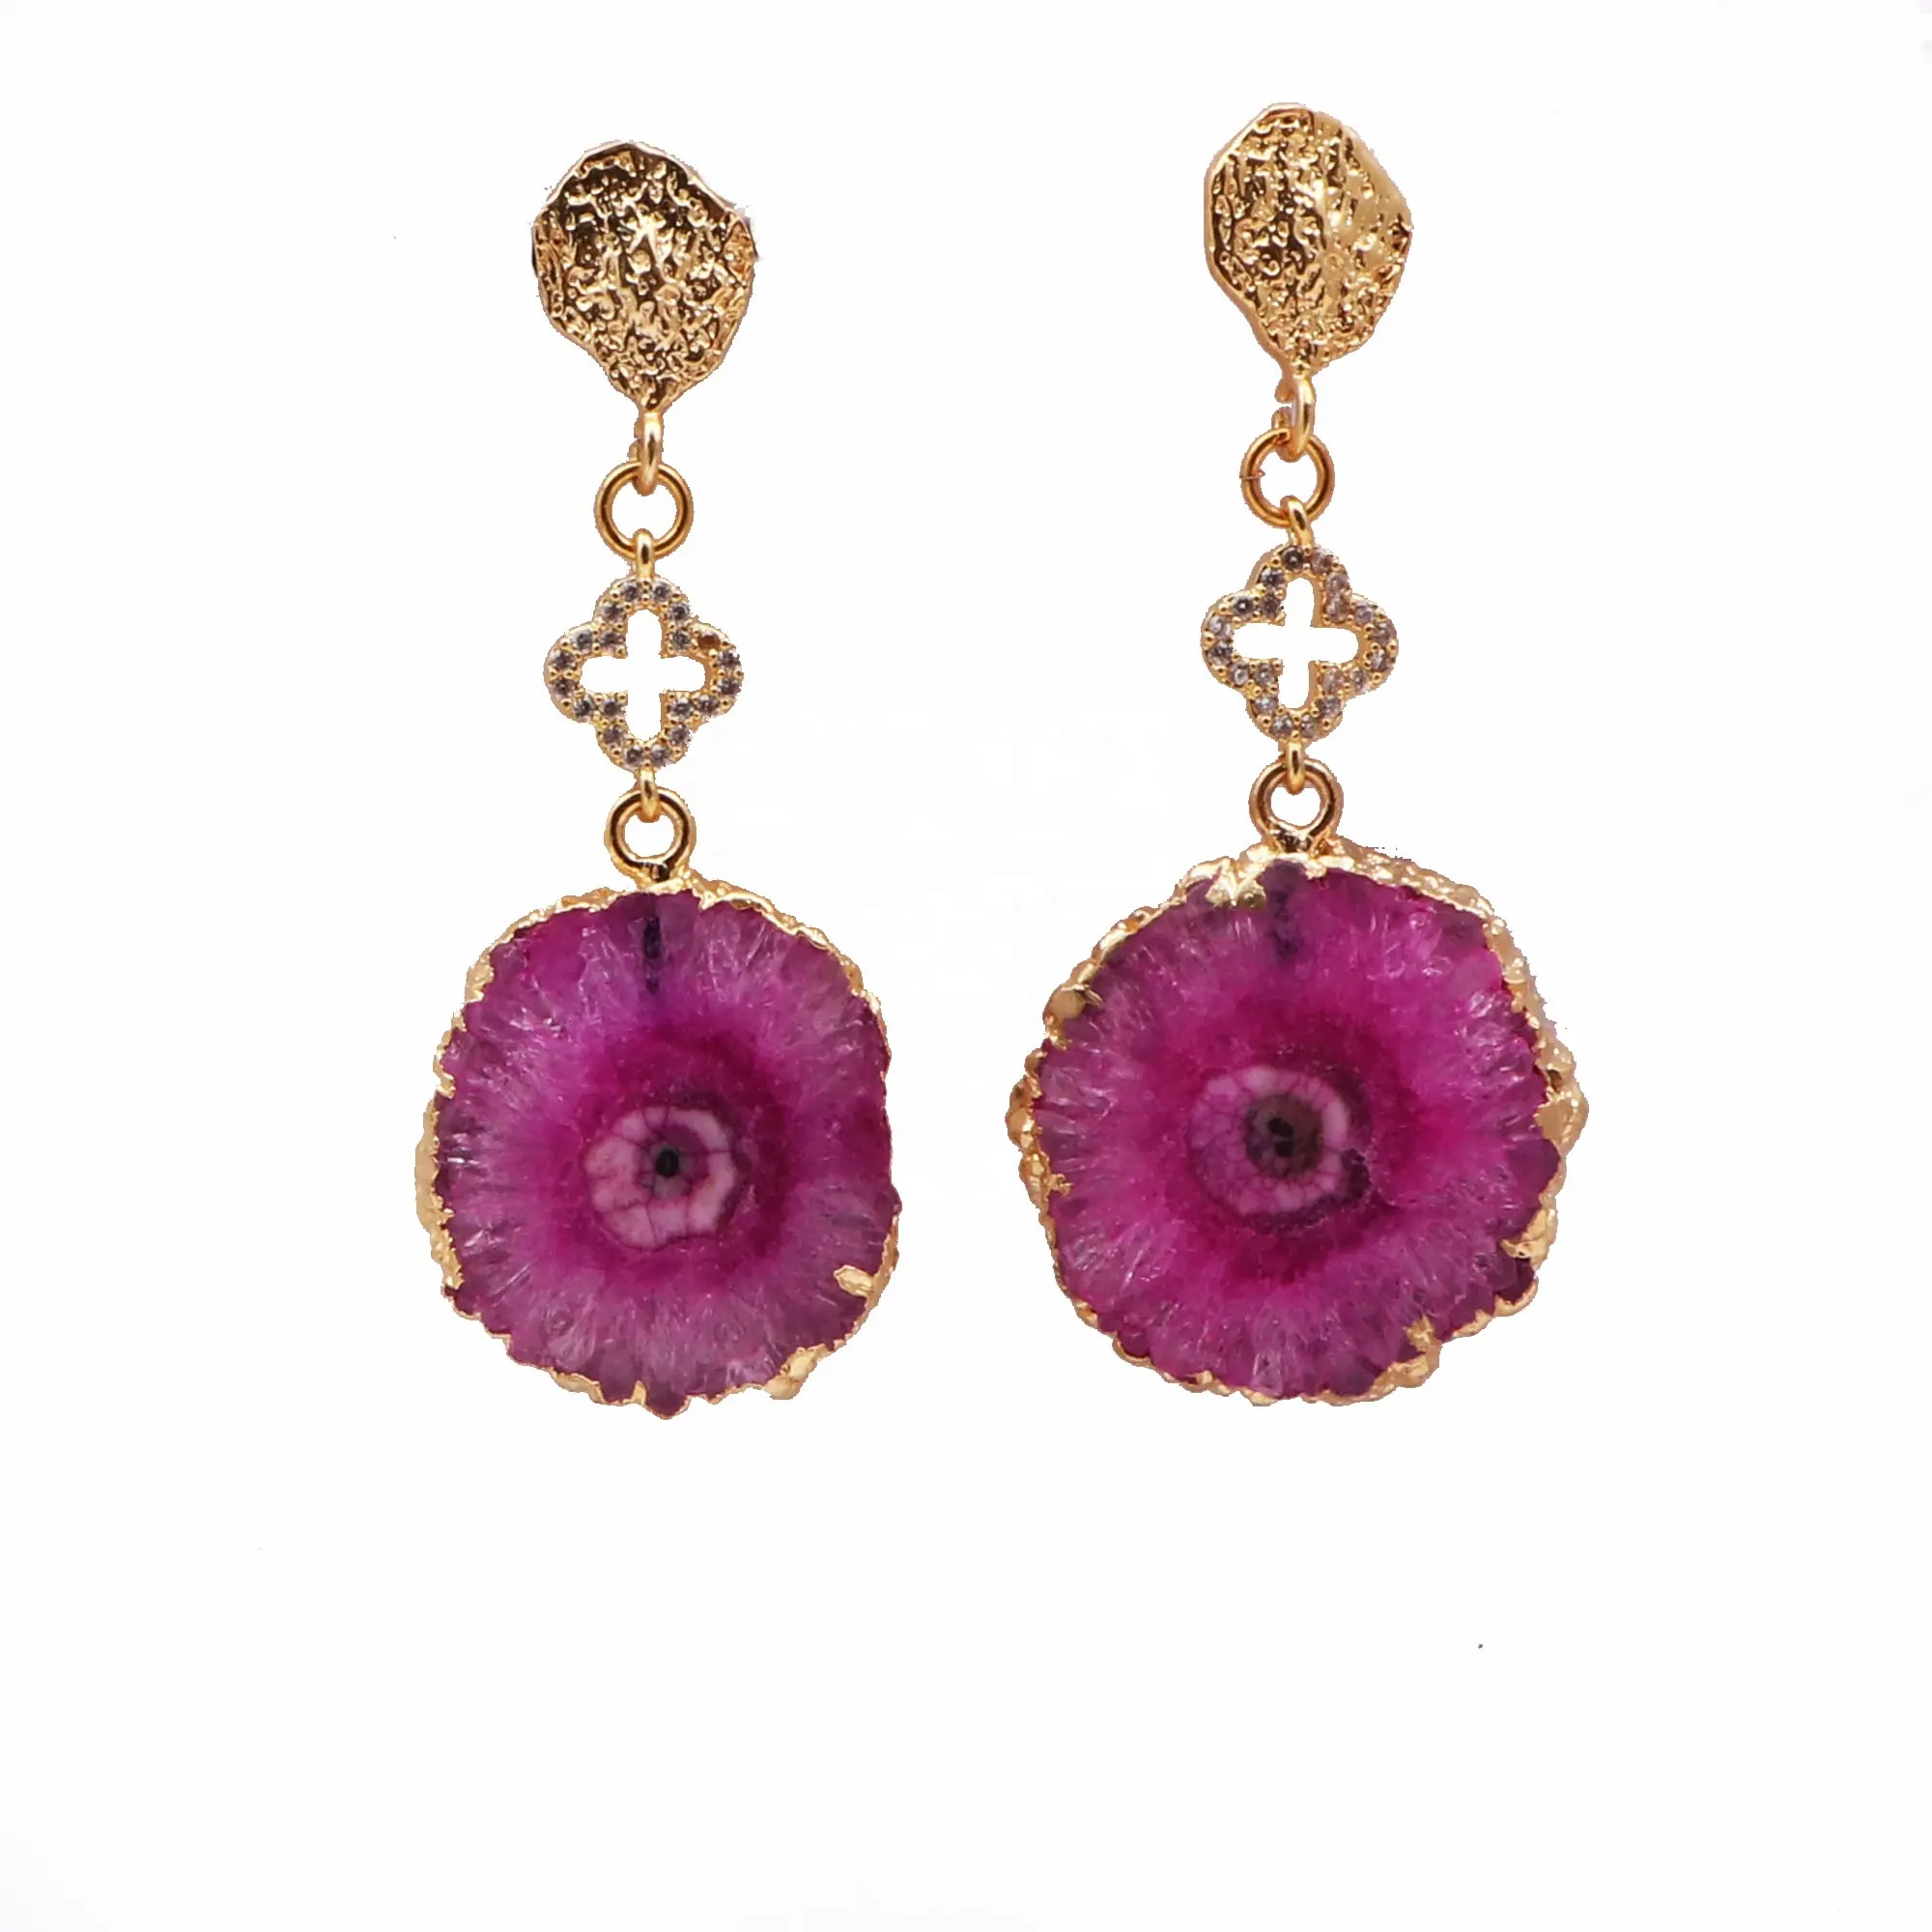 Gold plated latest fashion jewelry solar quartz cz gemstone stud earring pairs dangle drop stylish jewelry electroplated pair